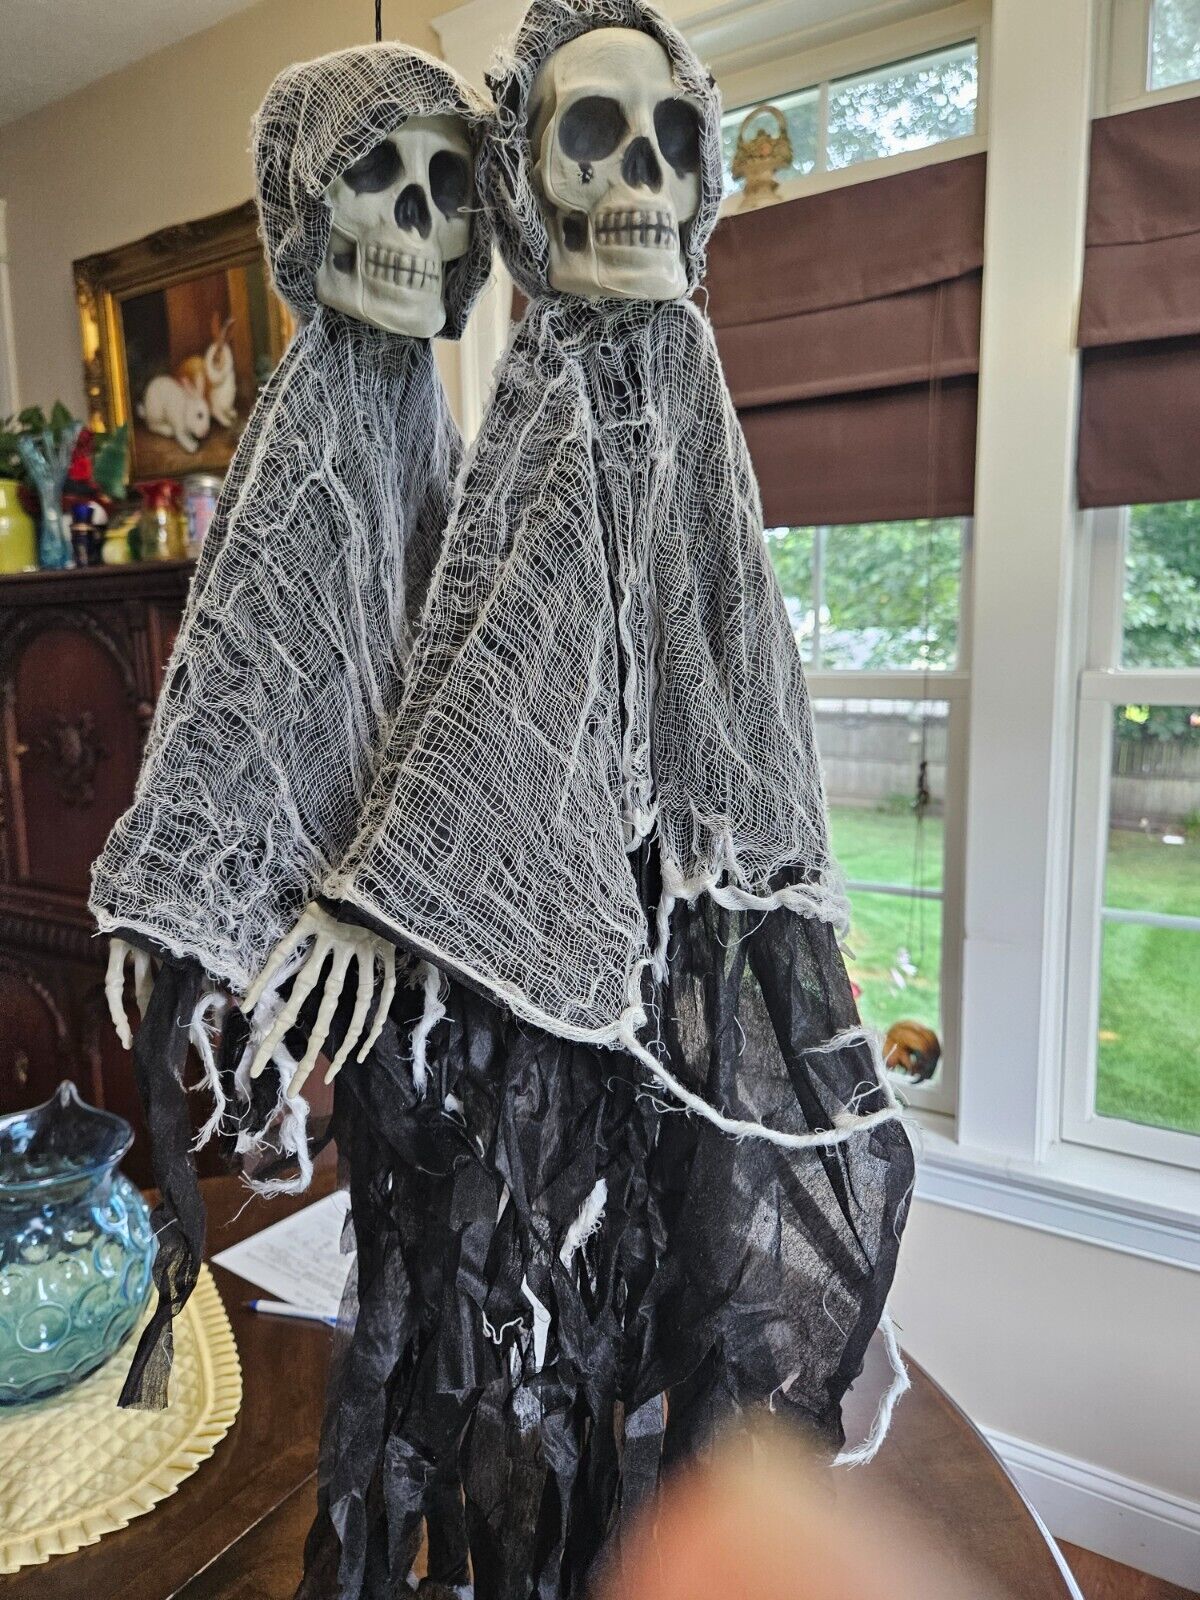 2 Spooky Hanging Skeleton  in Costume Halloween